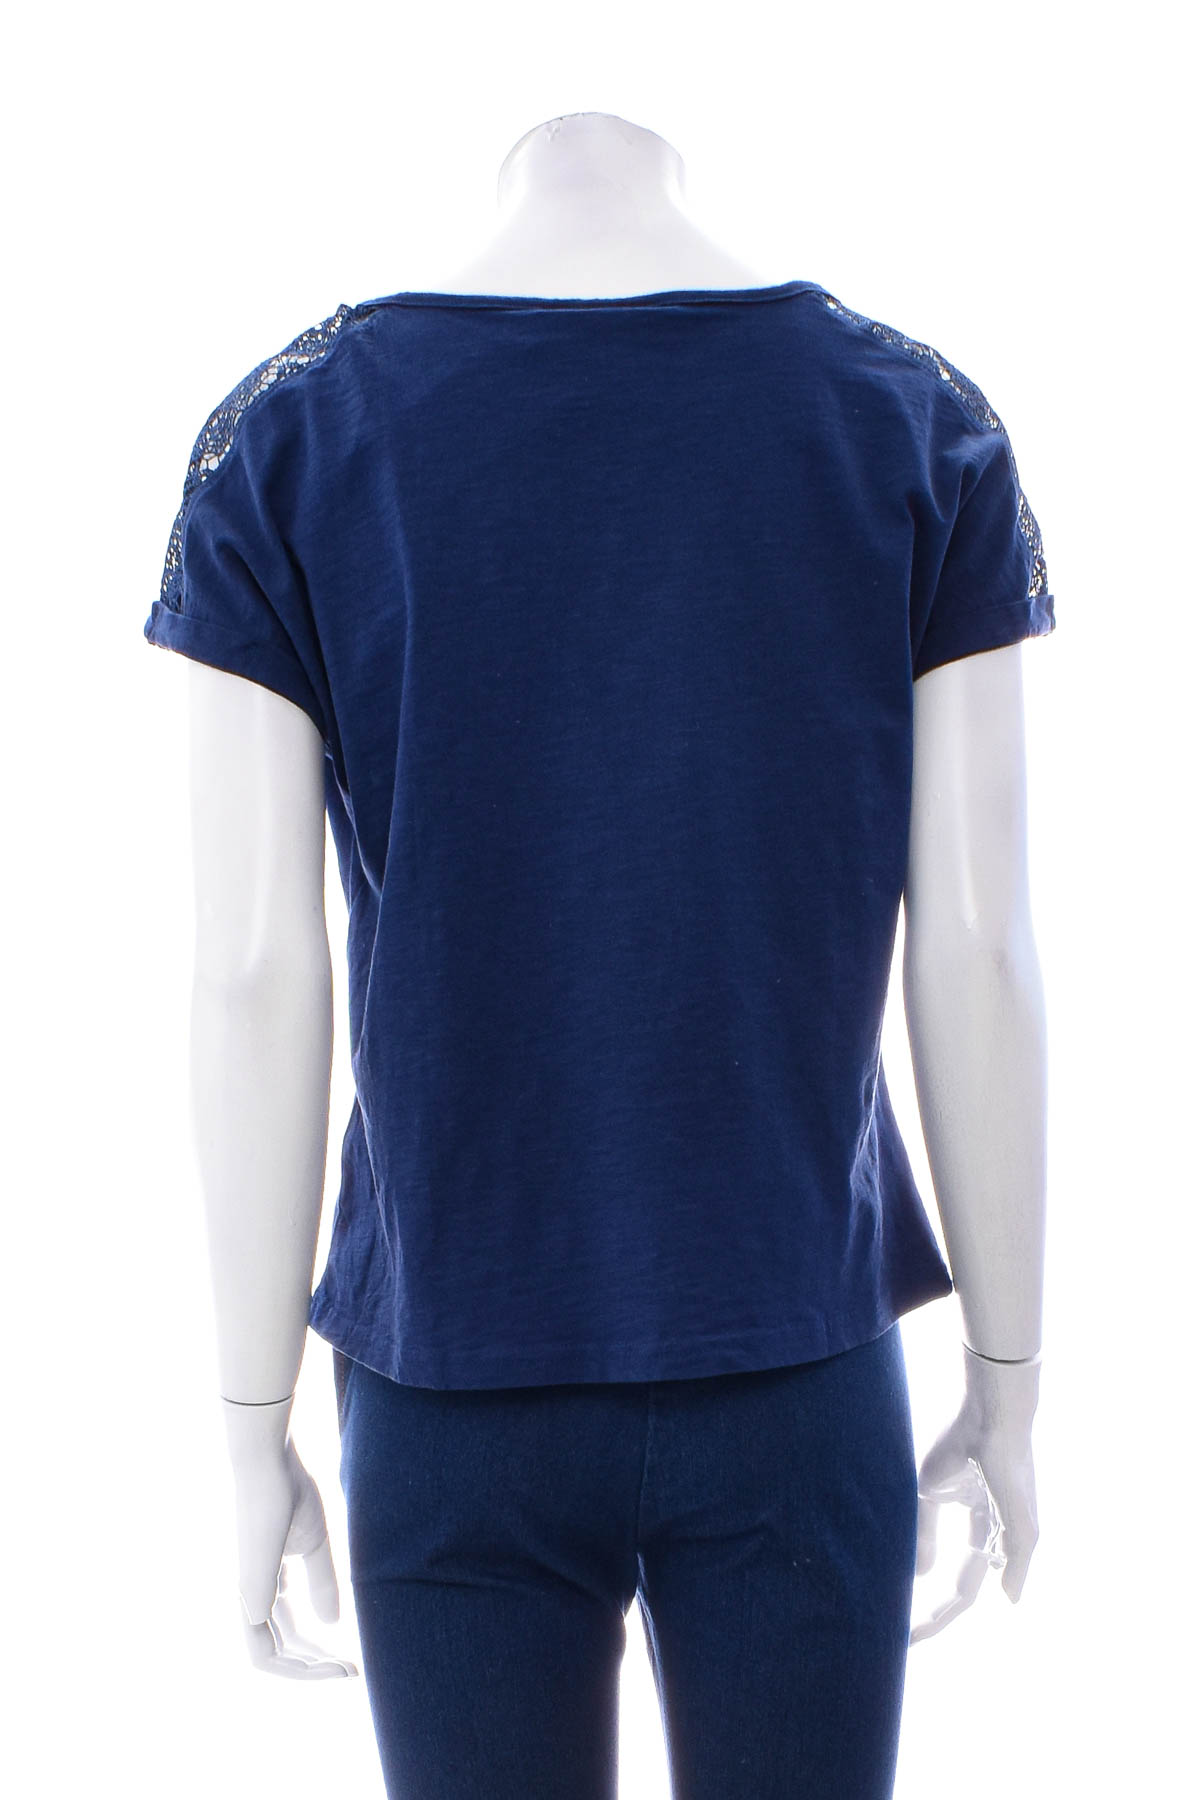 Tricou de damă - Blue Motion - 1